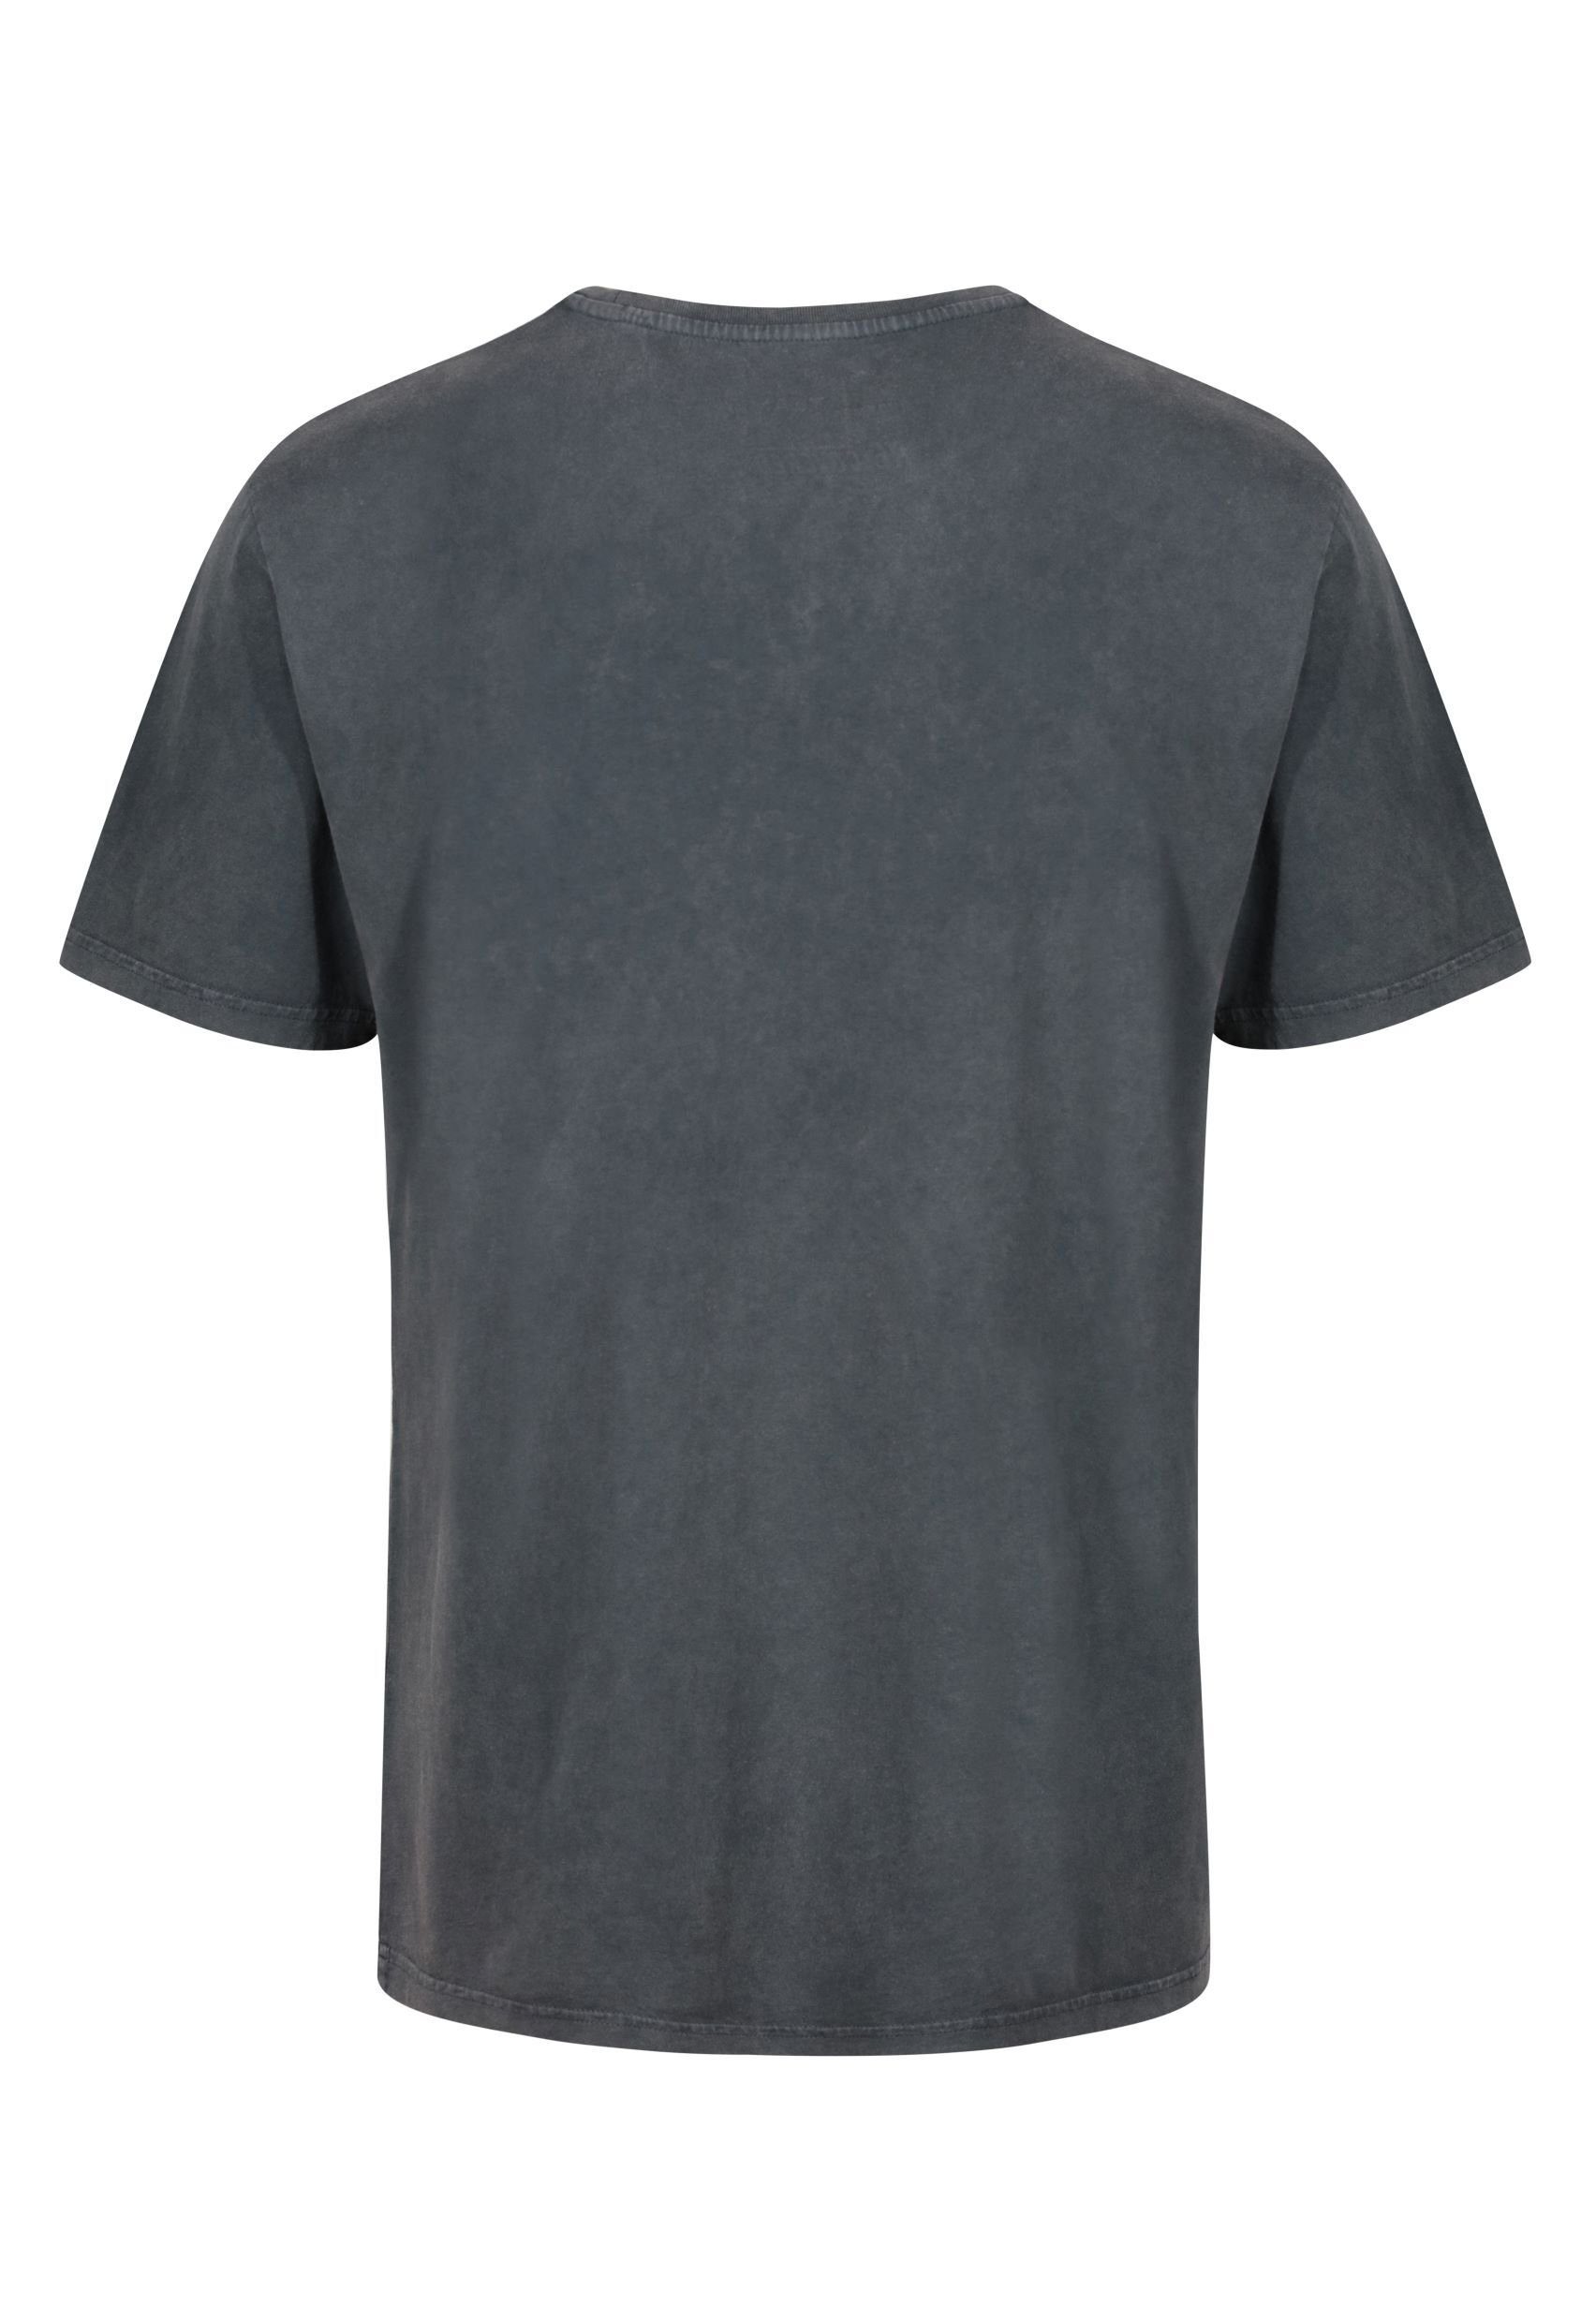 Recovered T-Shirt NFL RAIDERS MONOCHROME Bio-Baumwolle GOTS zertifizierte